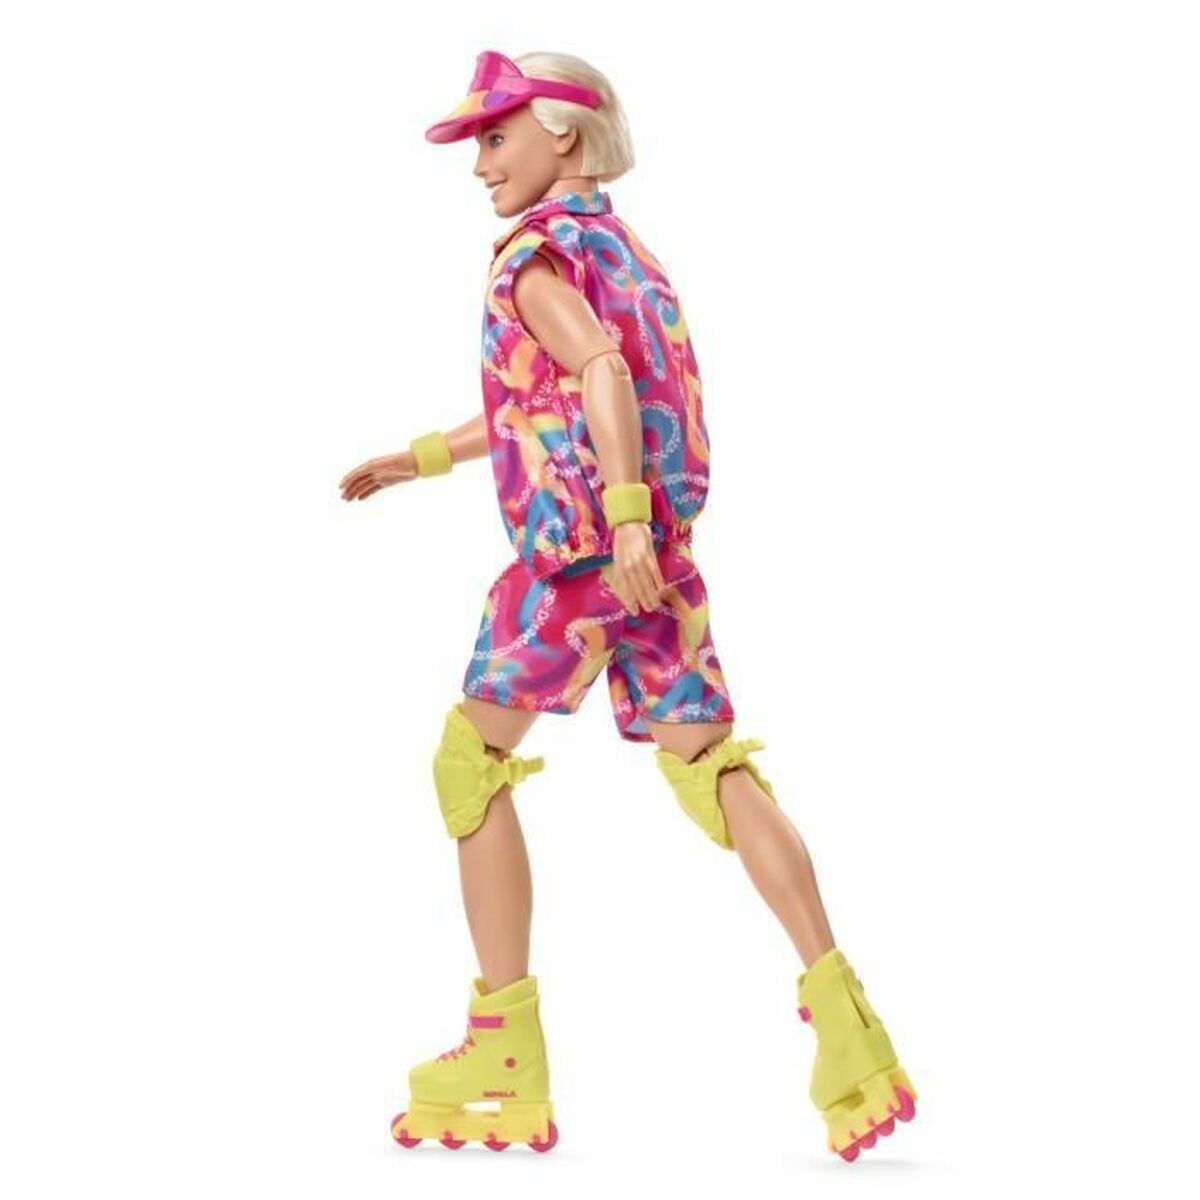 Lelle Barbie The movie Ken roller skate